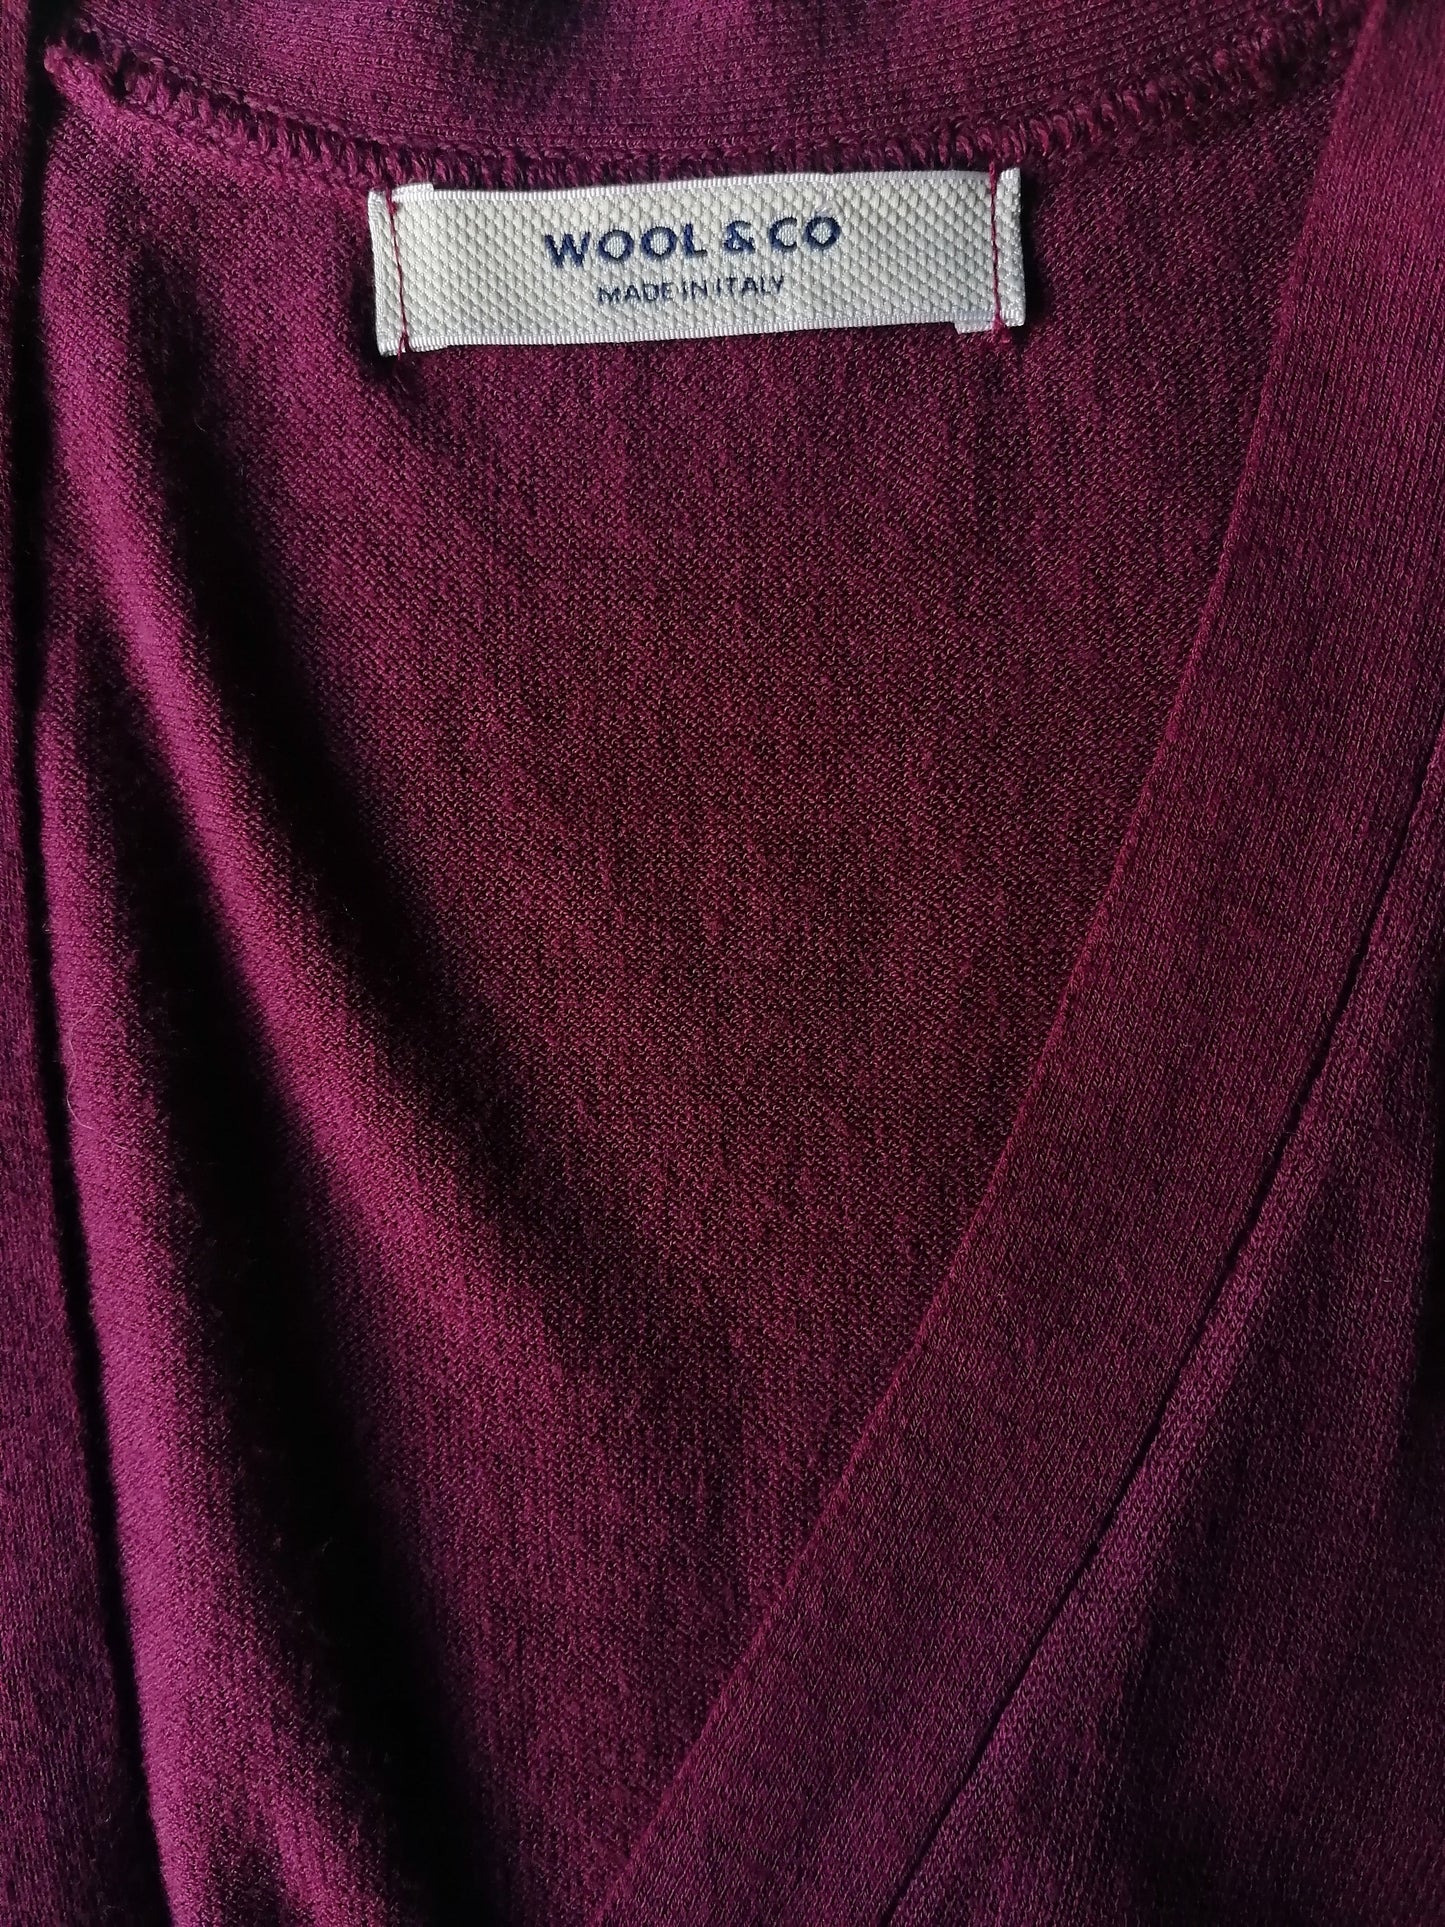 Wool & Co Katoenen gilet. Bordeaux gekleurd. Maat S.